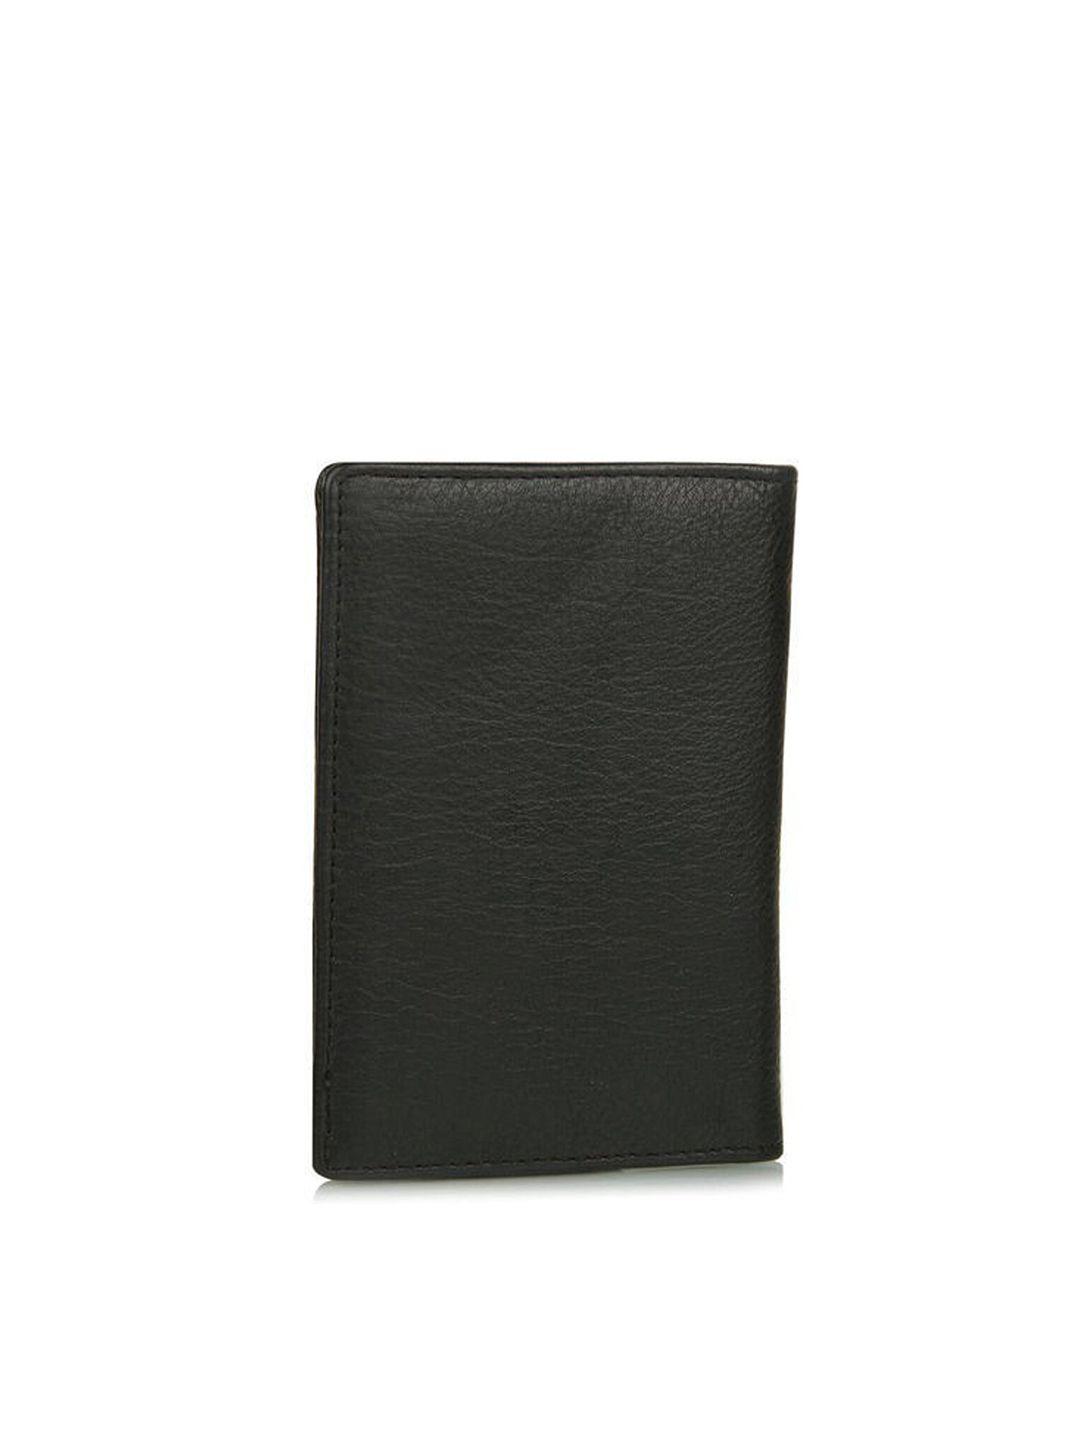 aditi wasan unisex black leather passport holder